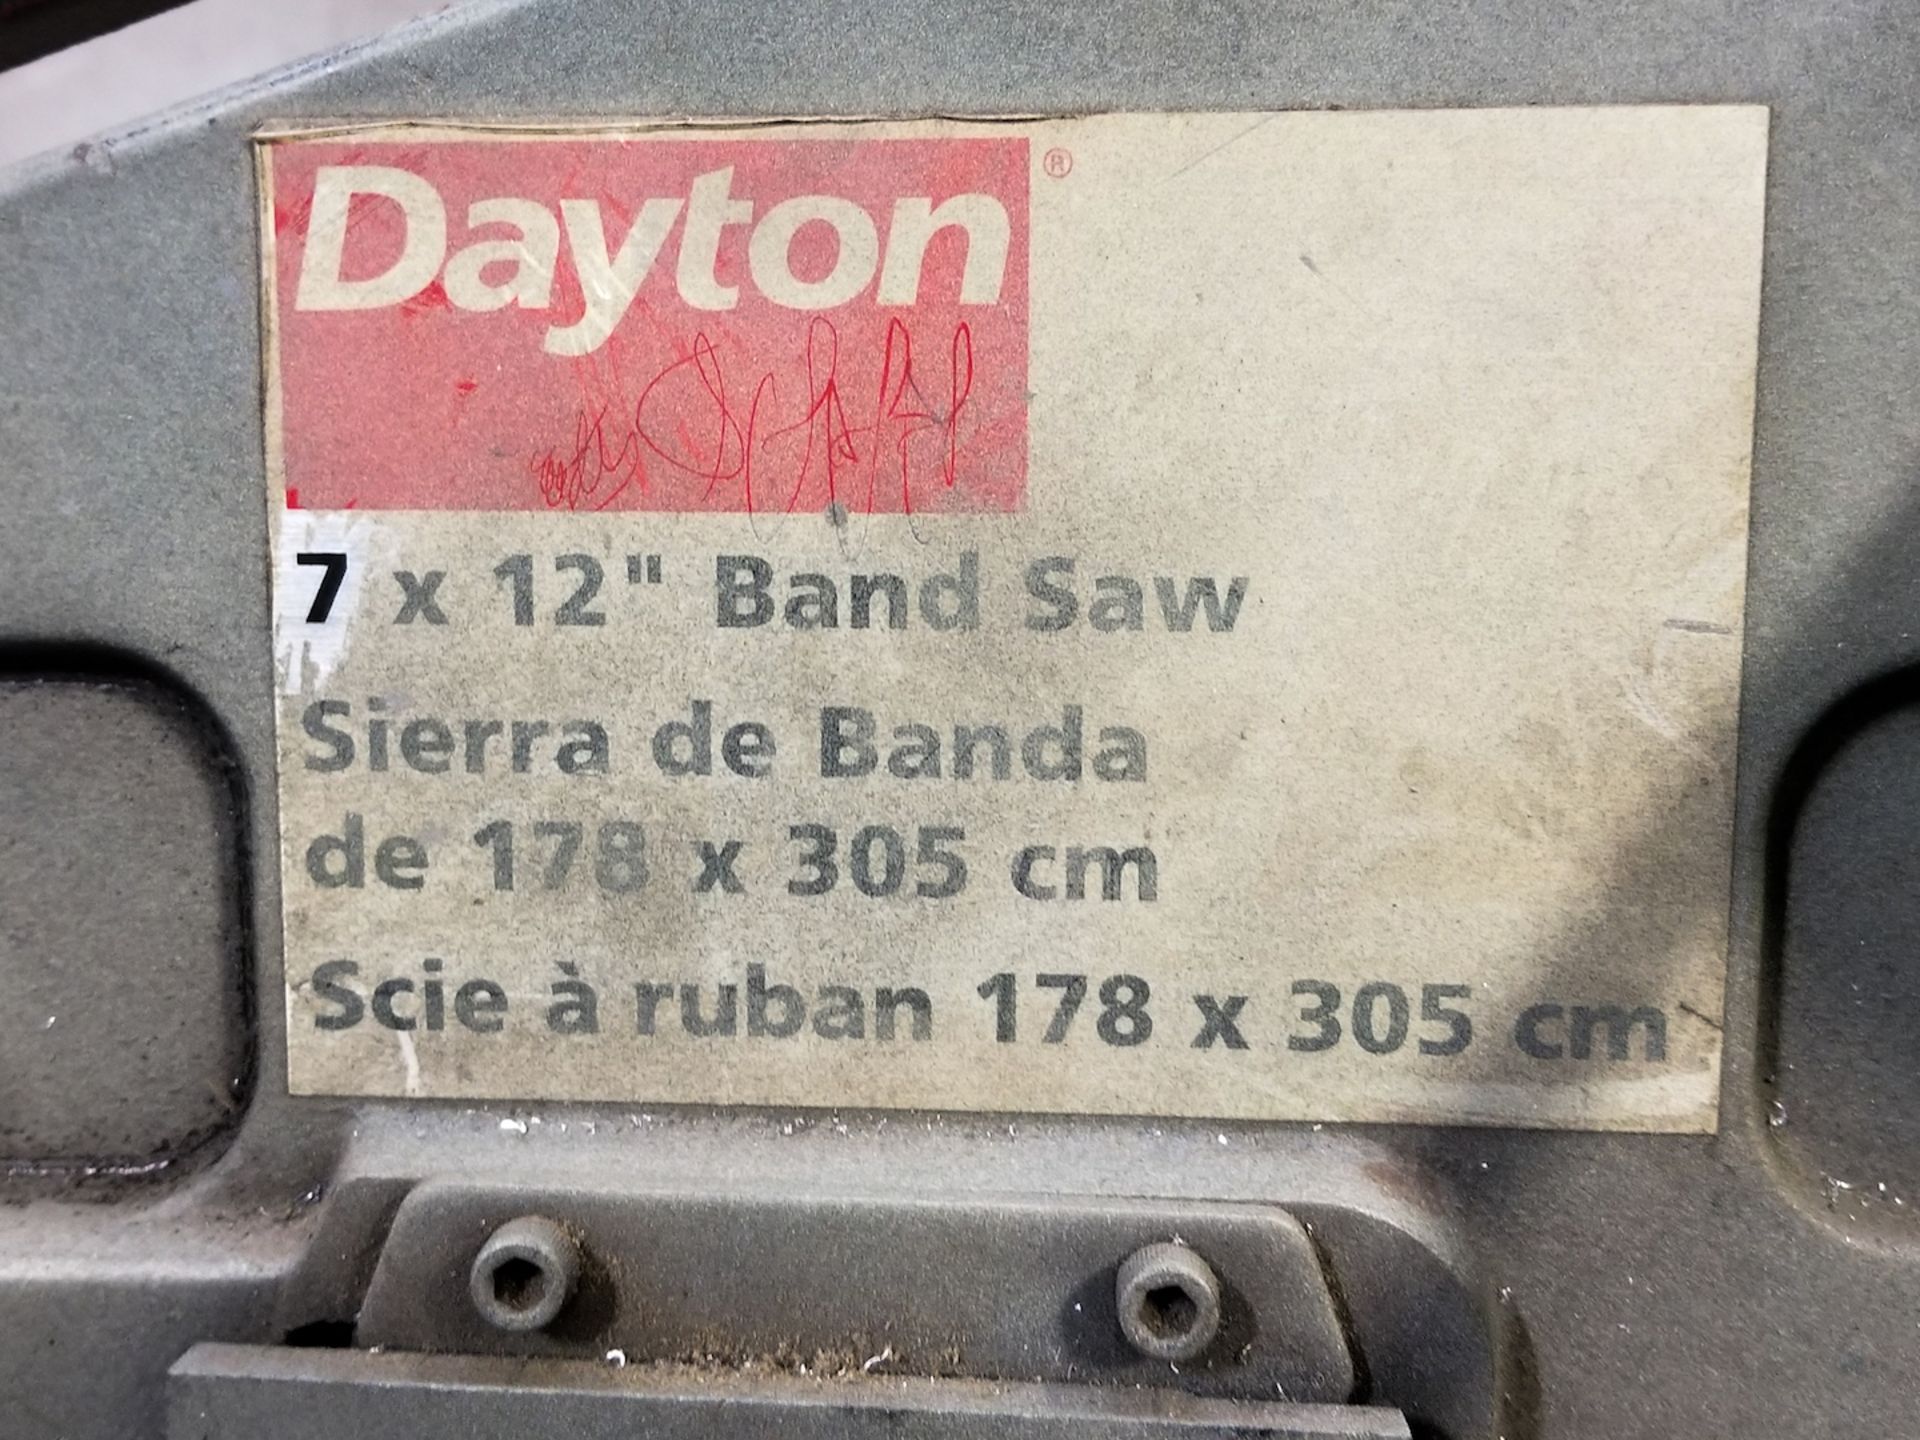 Dayton Model 4YG30A Horizontal Band Saw - Image 2 of 2